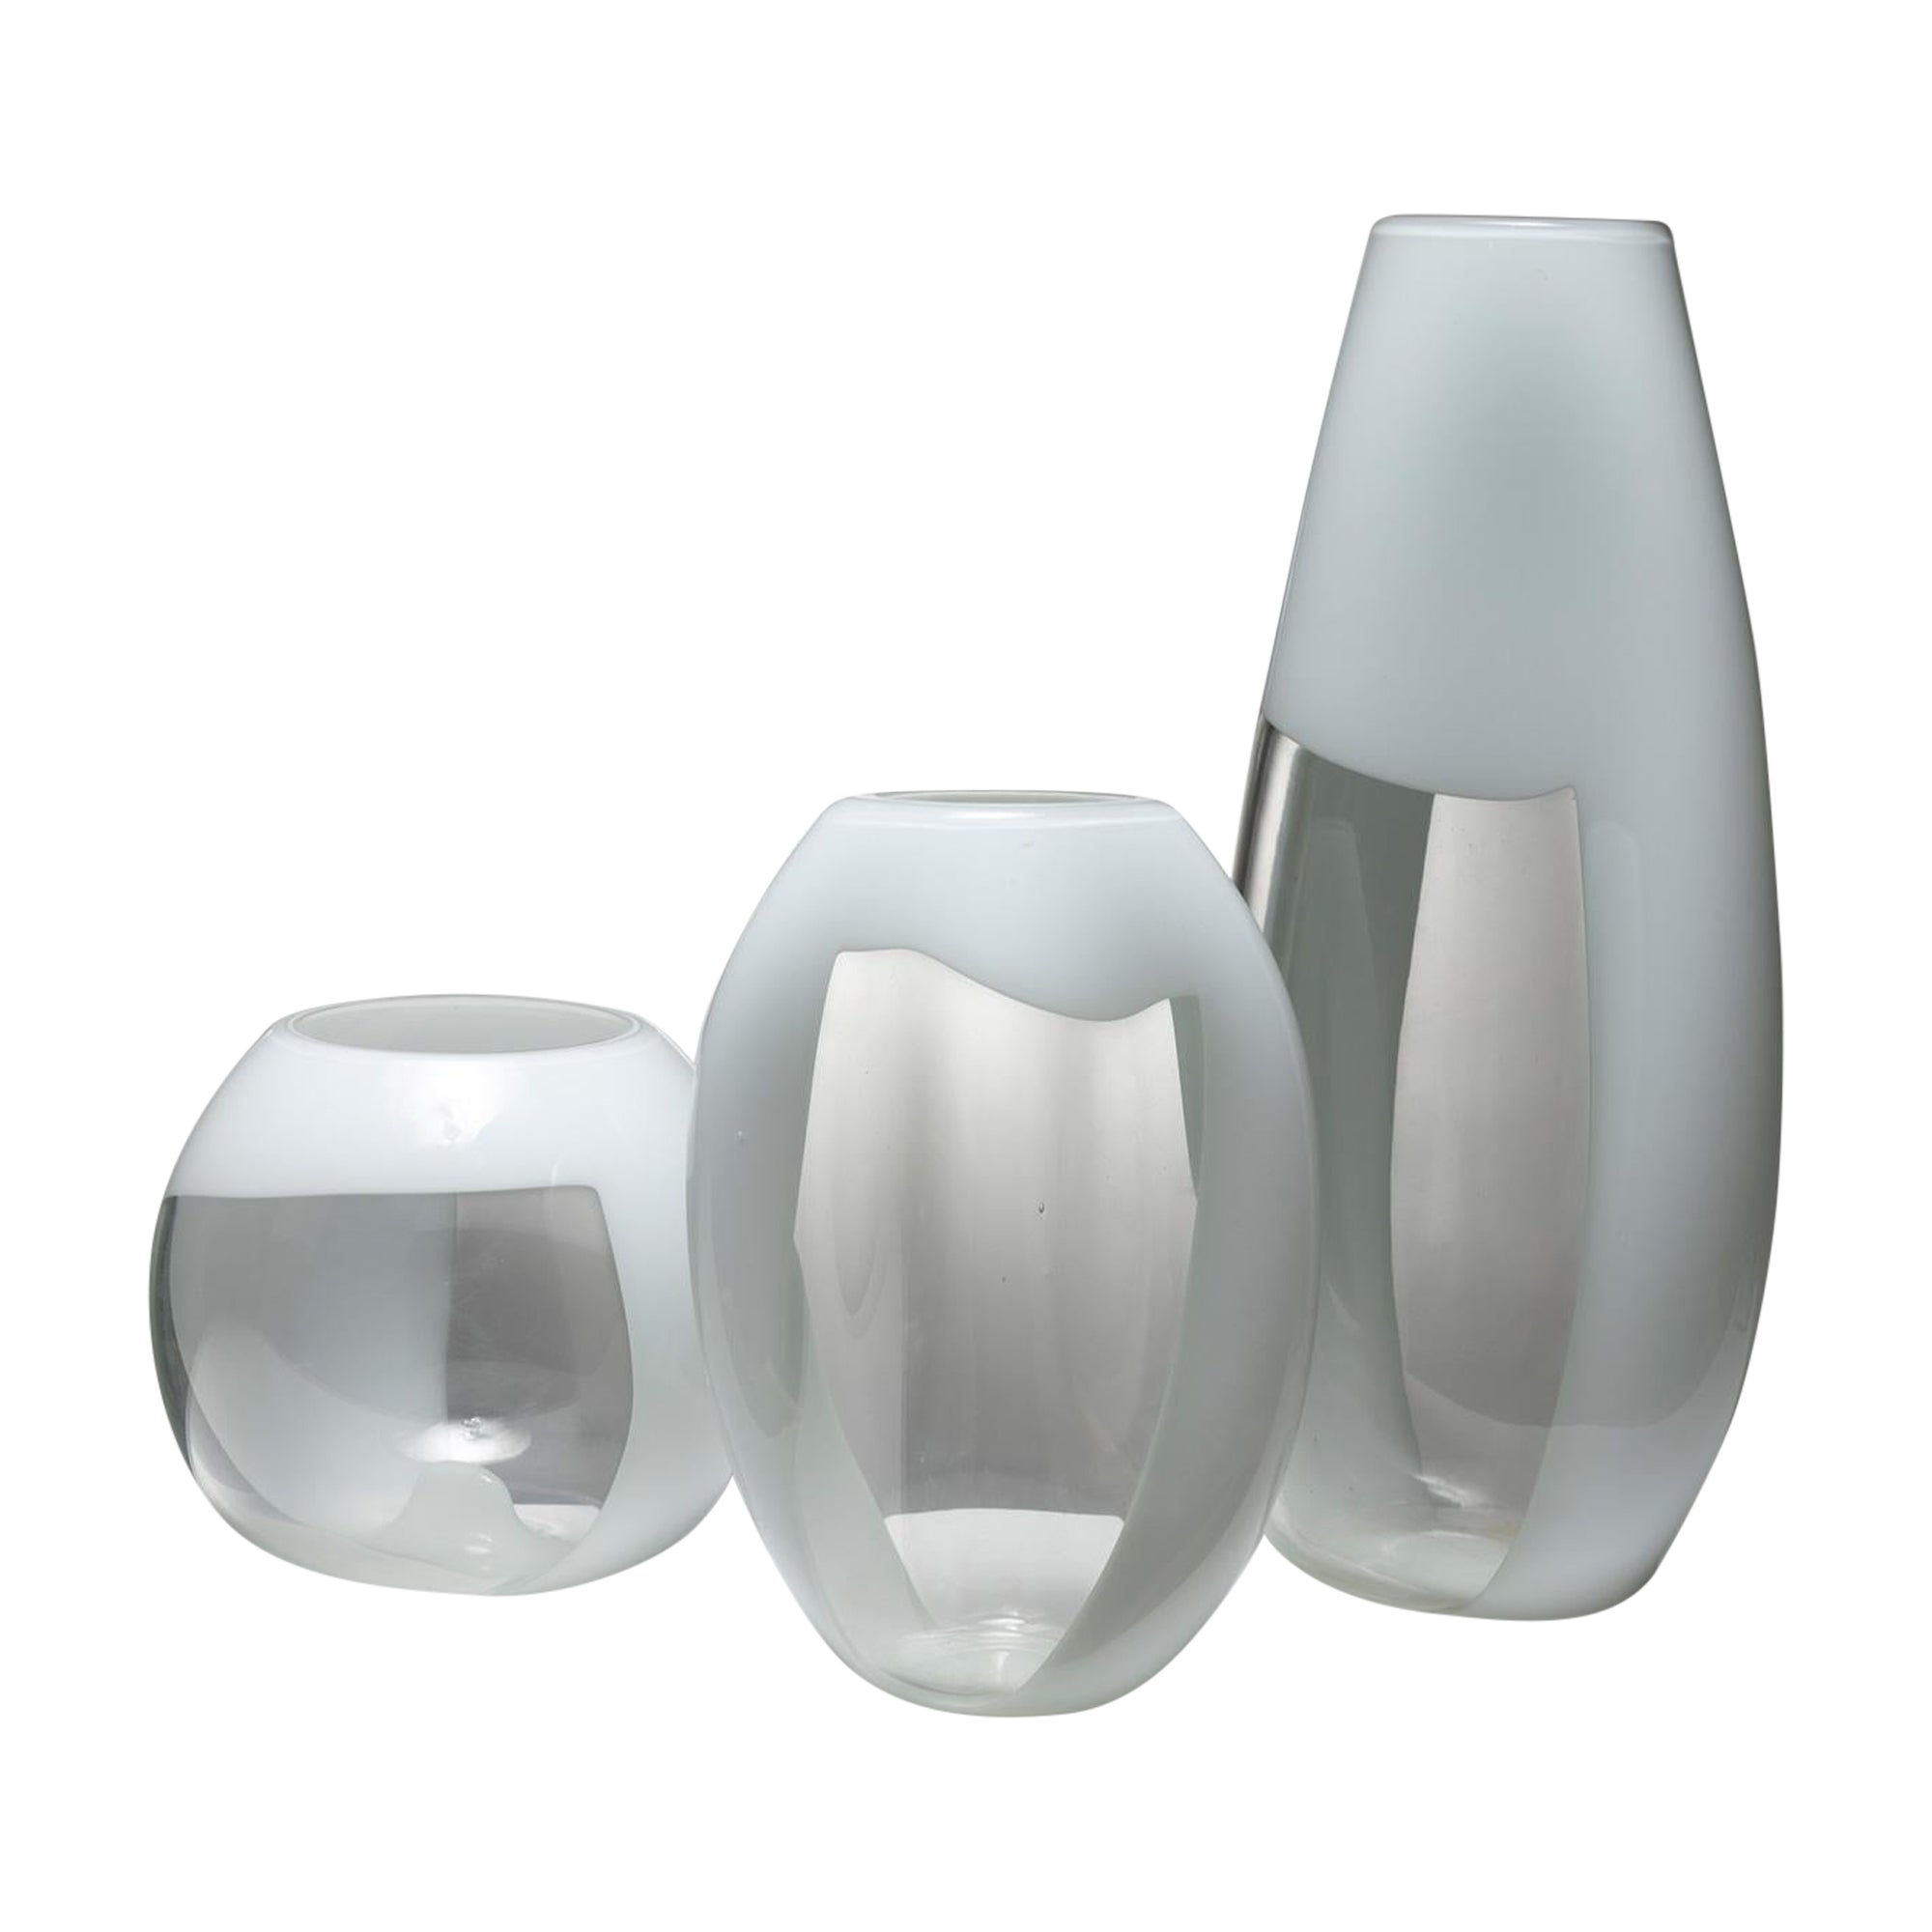 Set of Three Murano Glass Vases Manufactured by Vetreria Vistosi, Italy, 1970s